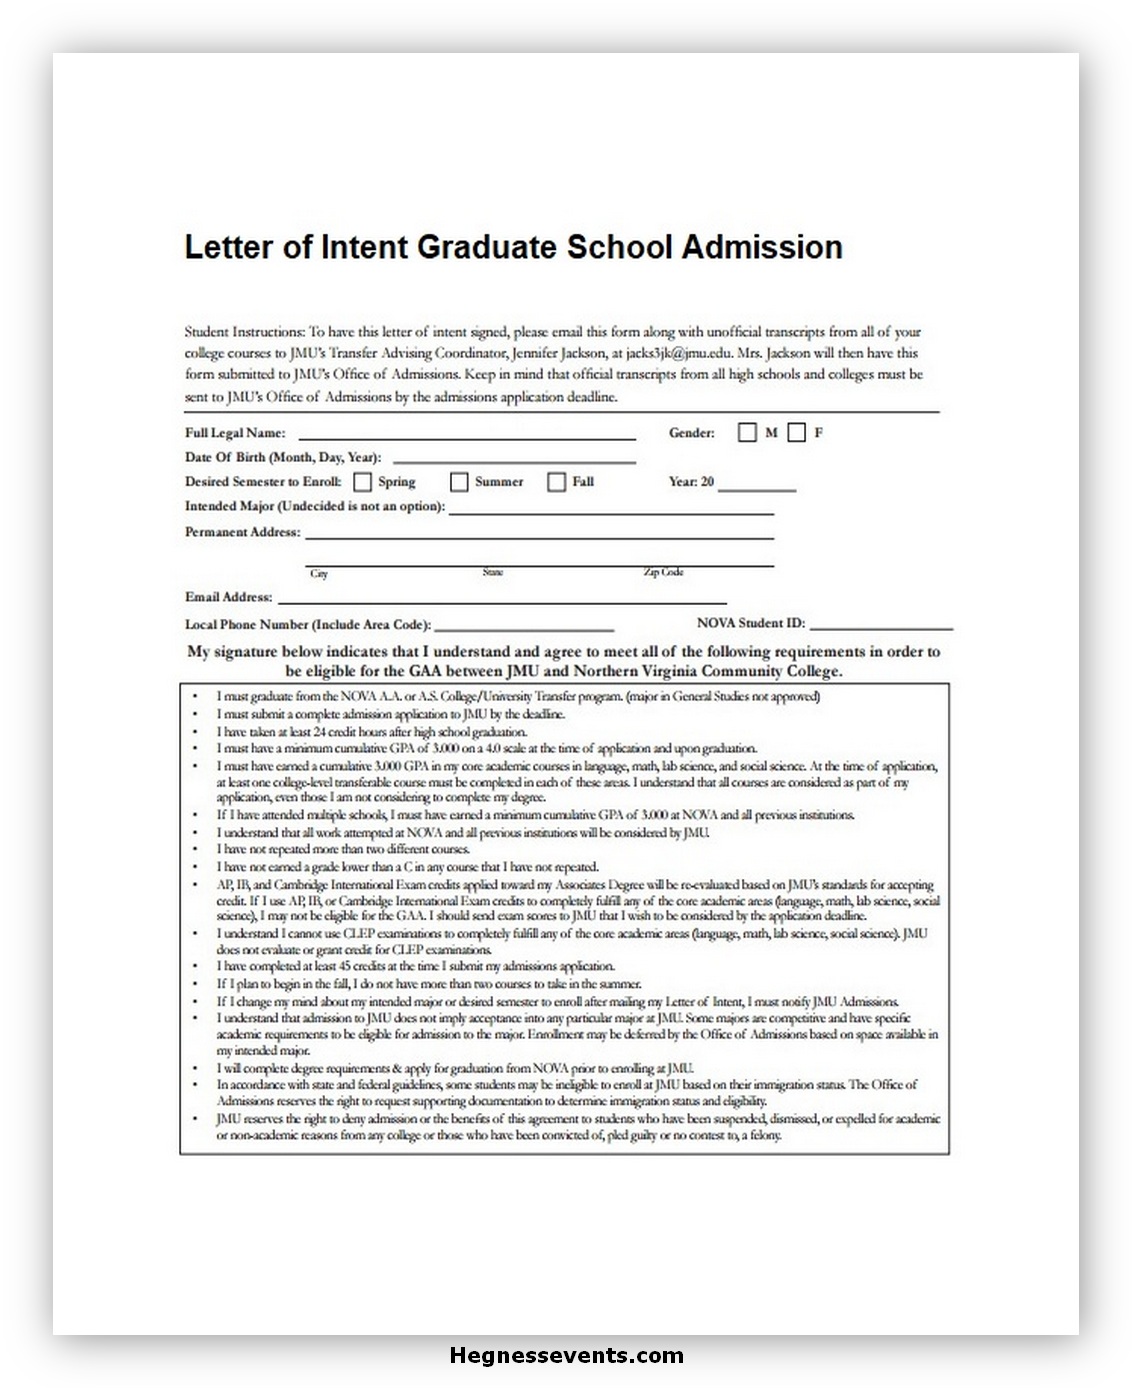 Letters of Intent Graduate School 03